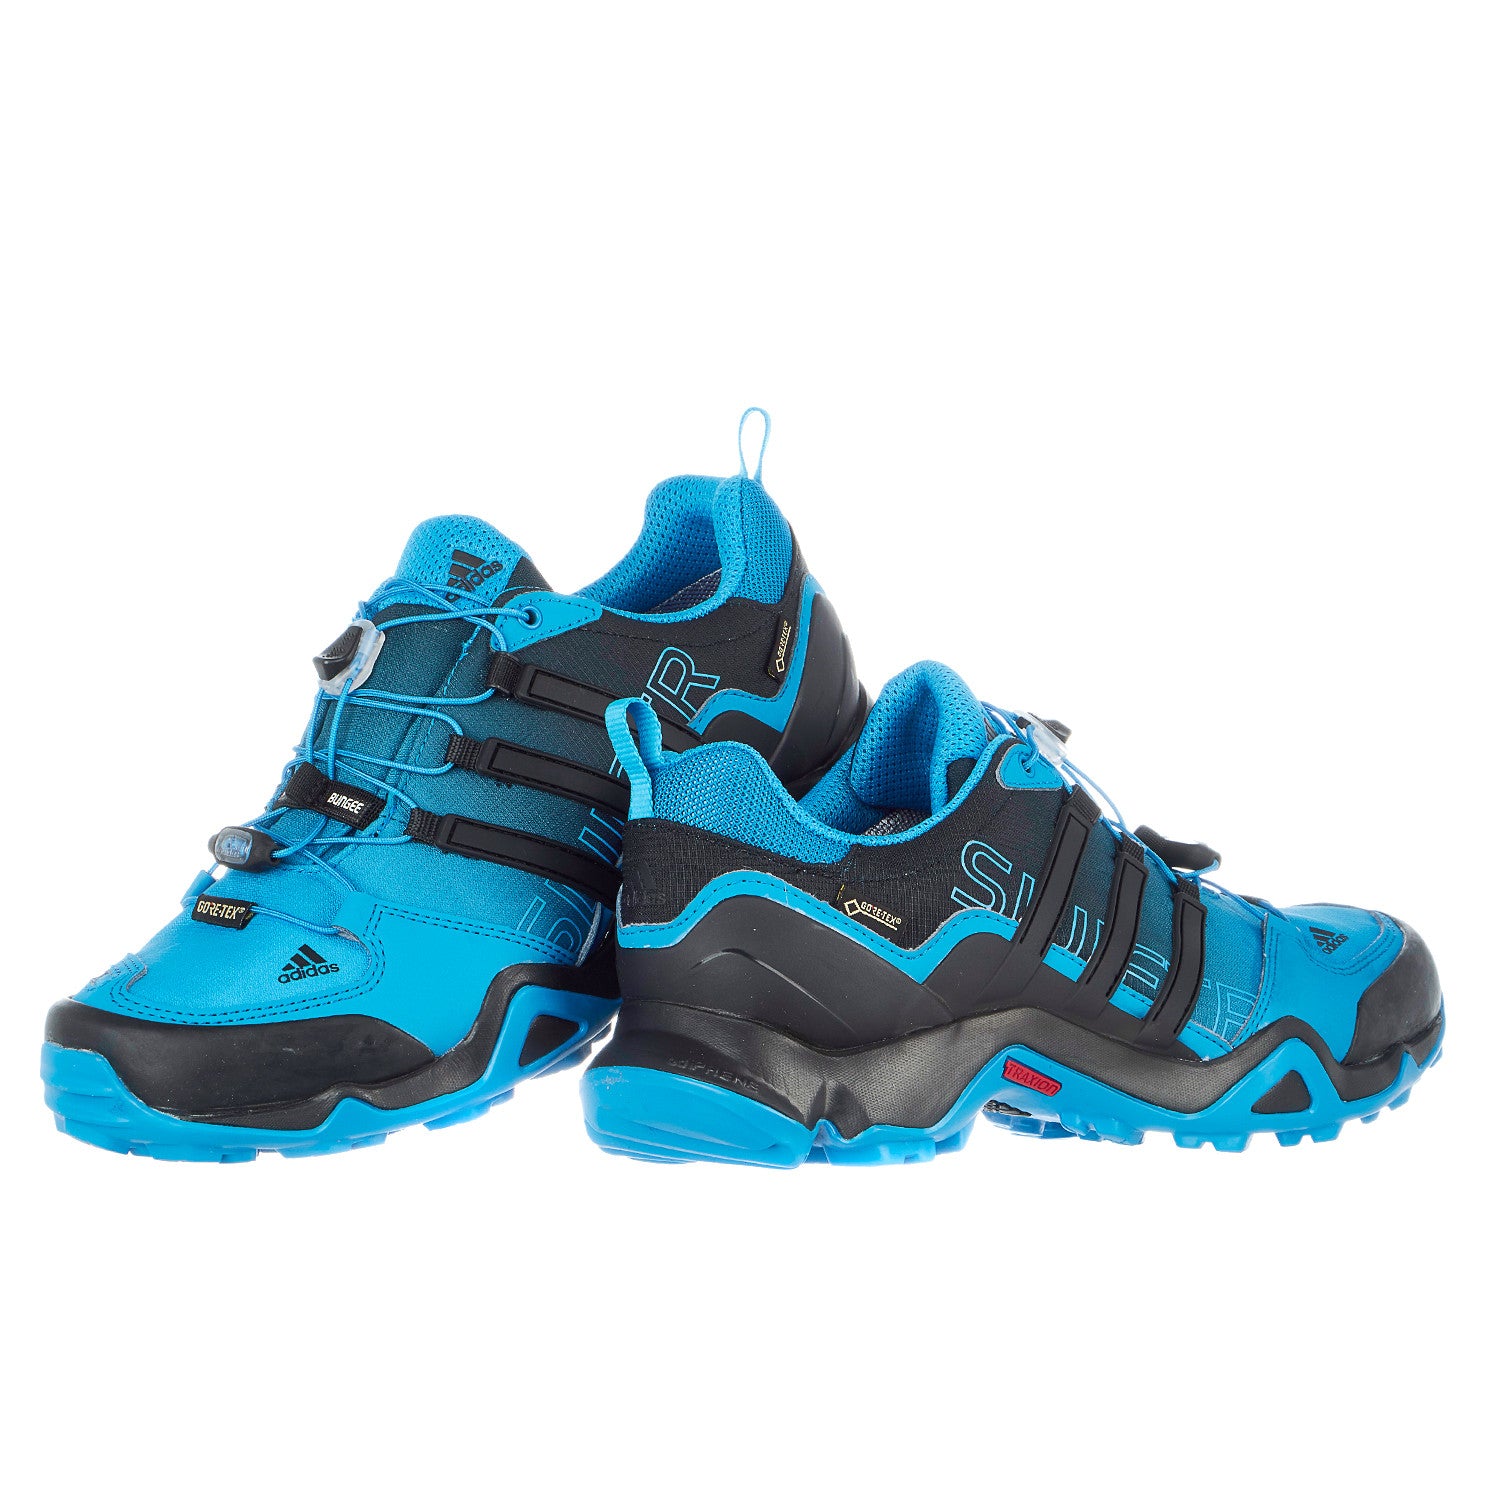 Adidas Men's Terrex Swift R Gtx Hiking Shoes Hot Sale | bellvalefarms.com